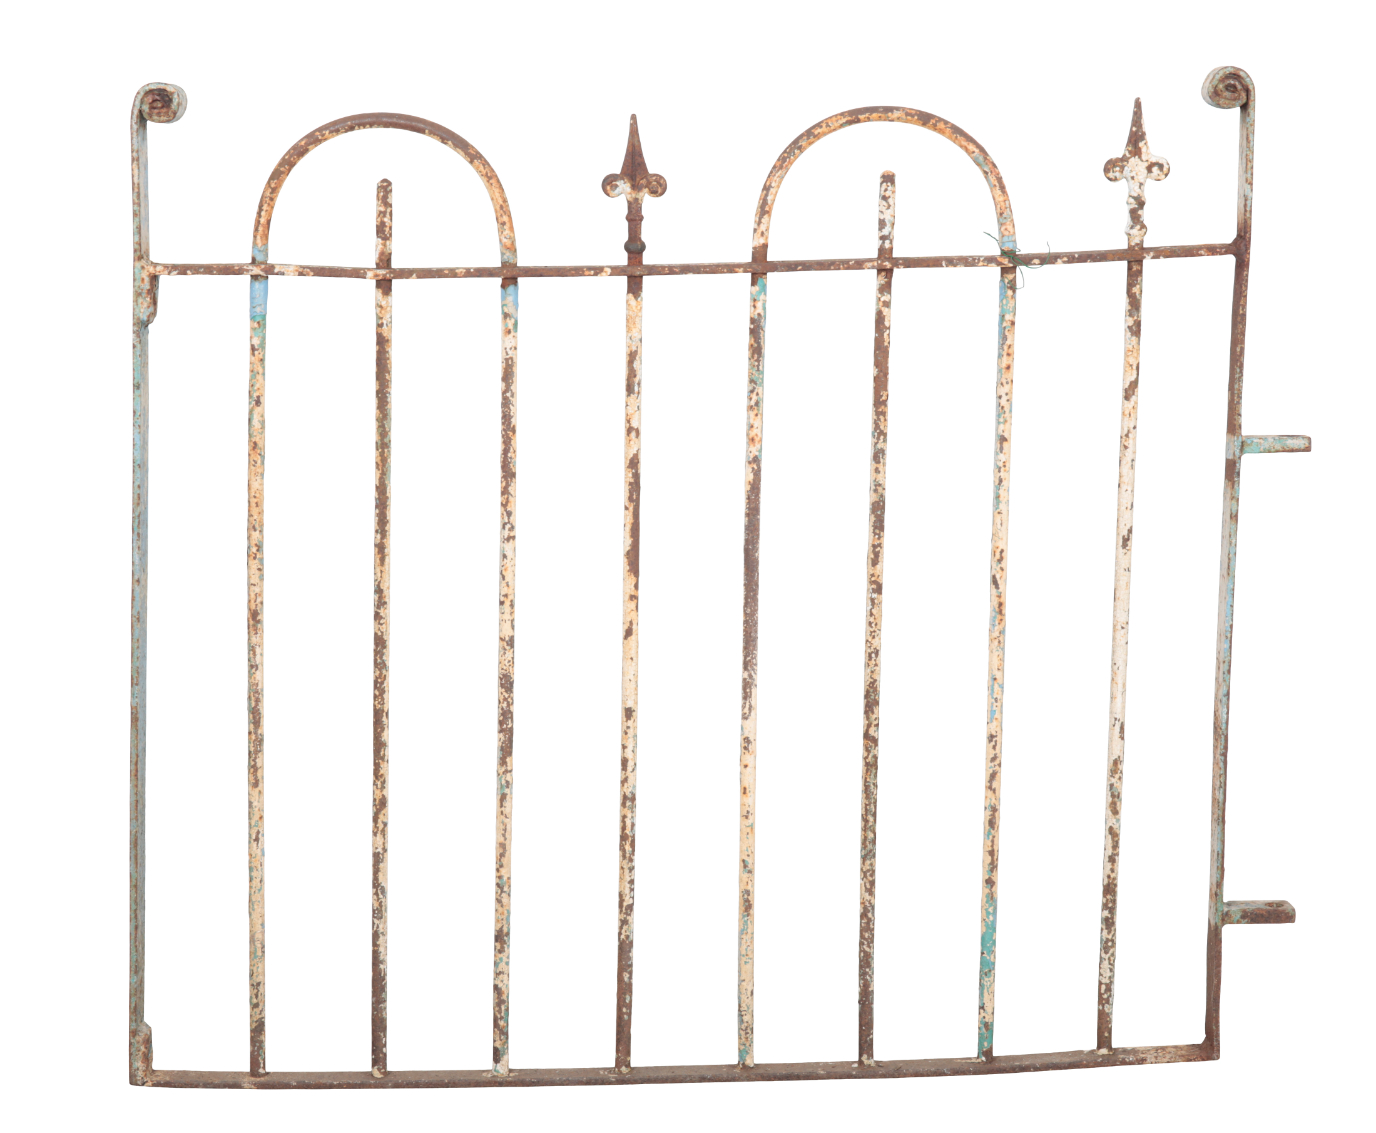 A WROUGHT IRON GATE 102cm high x 118cm